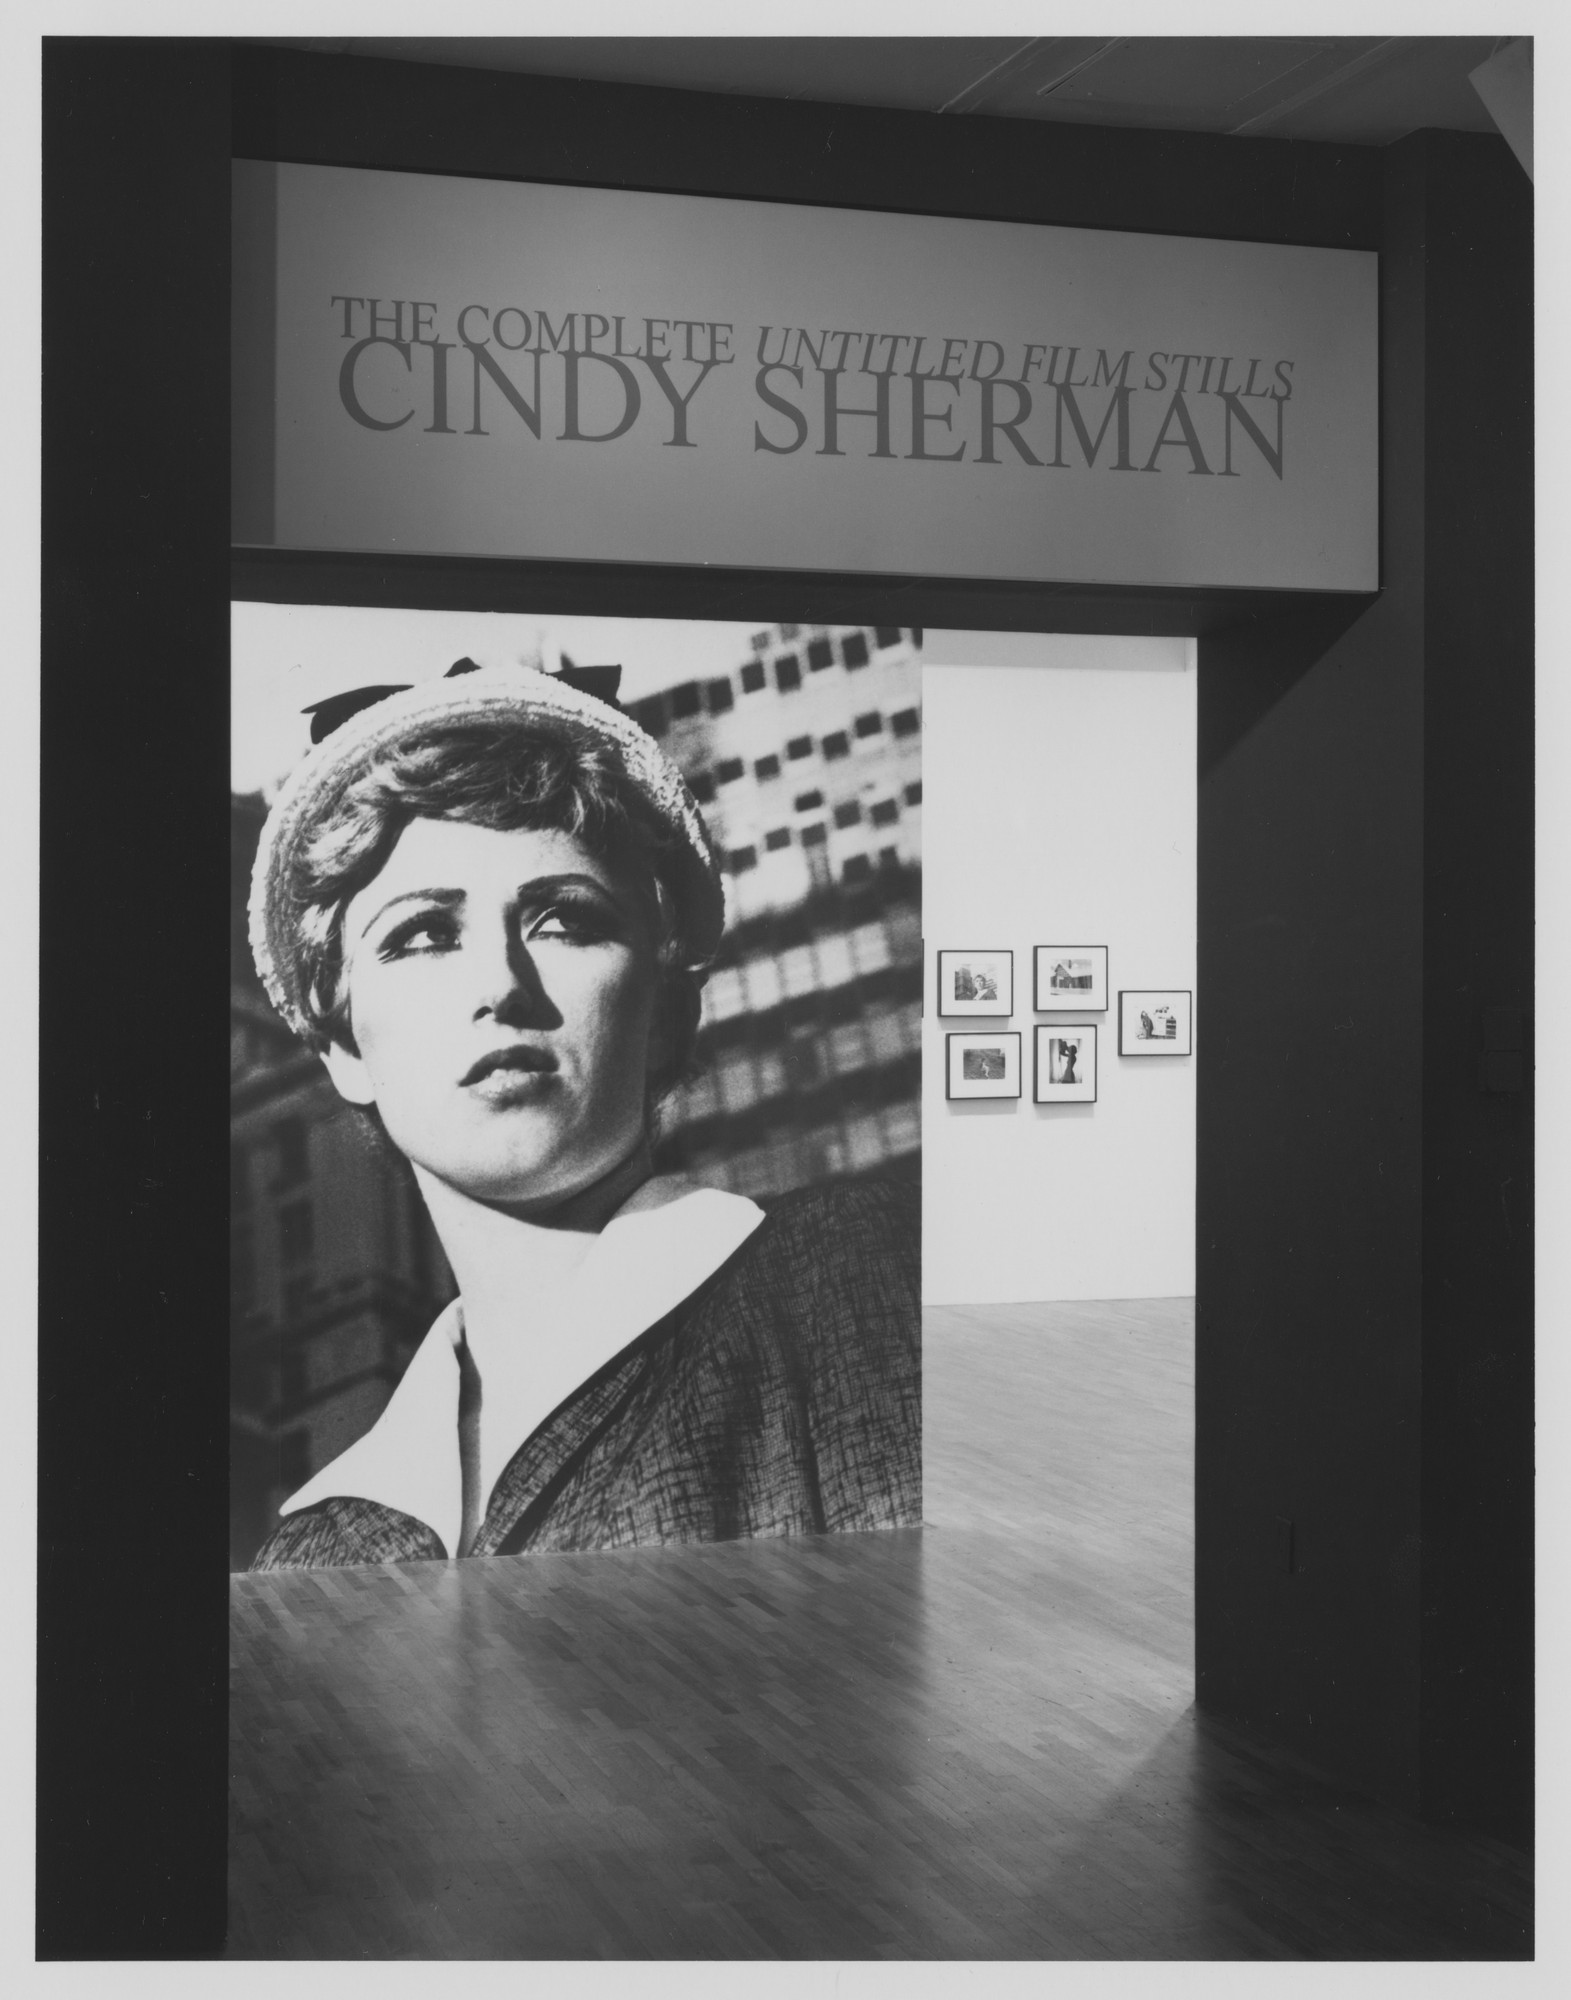 Cindy Sherman: The Complete Untitled Film Stills - Cindy Sherman